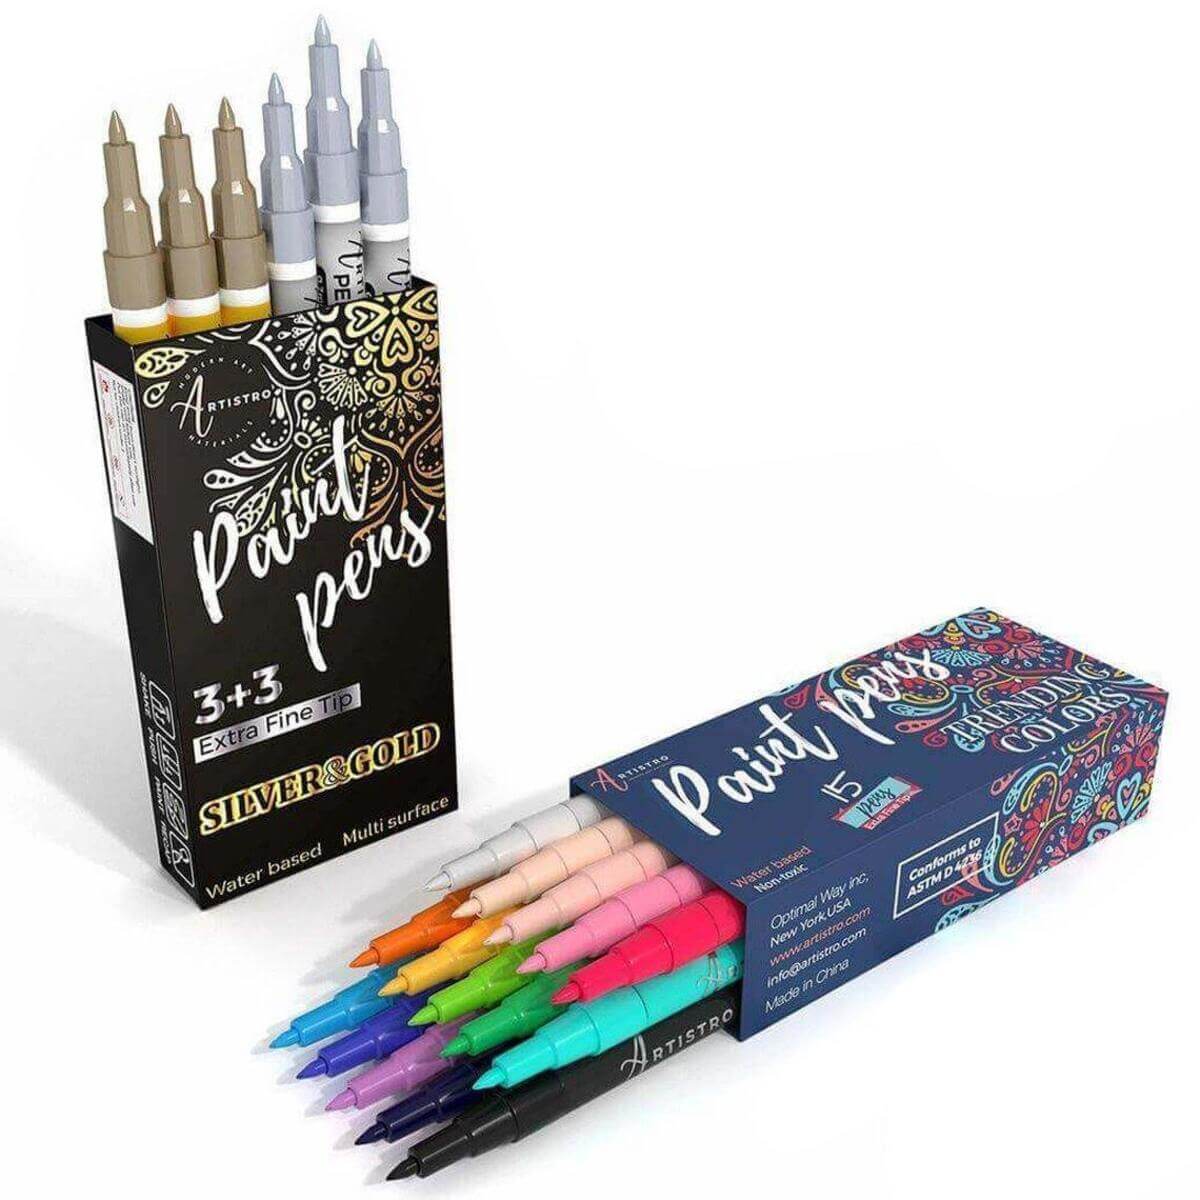 TEHAUX 12pcs Highlighter Paint Markers Drawing Markers Paint Pens for Metal  Fine Tip Paint Pens Fine Tip Artist Pens Art Pens Painting Supplies